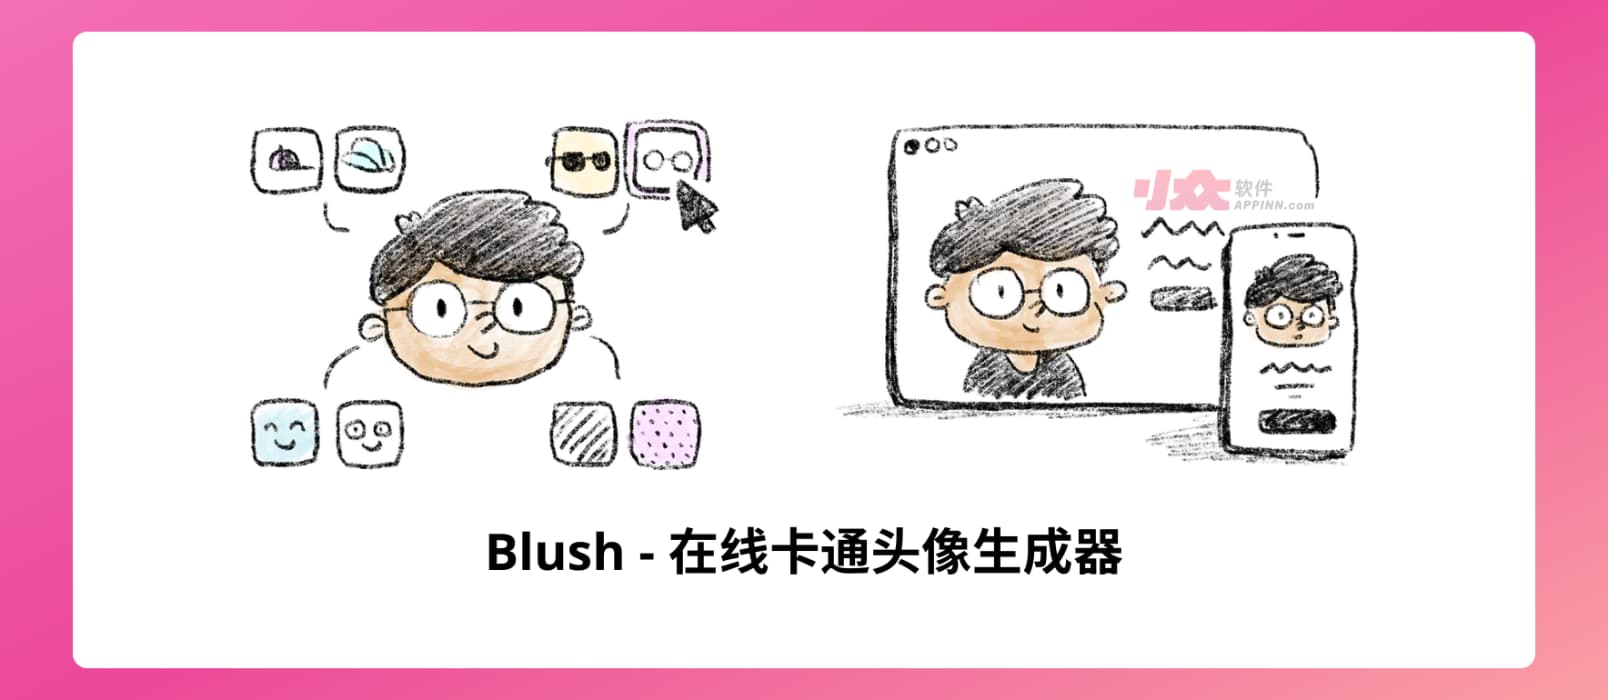 Blush - 在线卡通头像生成器，免费、可商用，无需注明出处